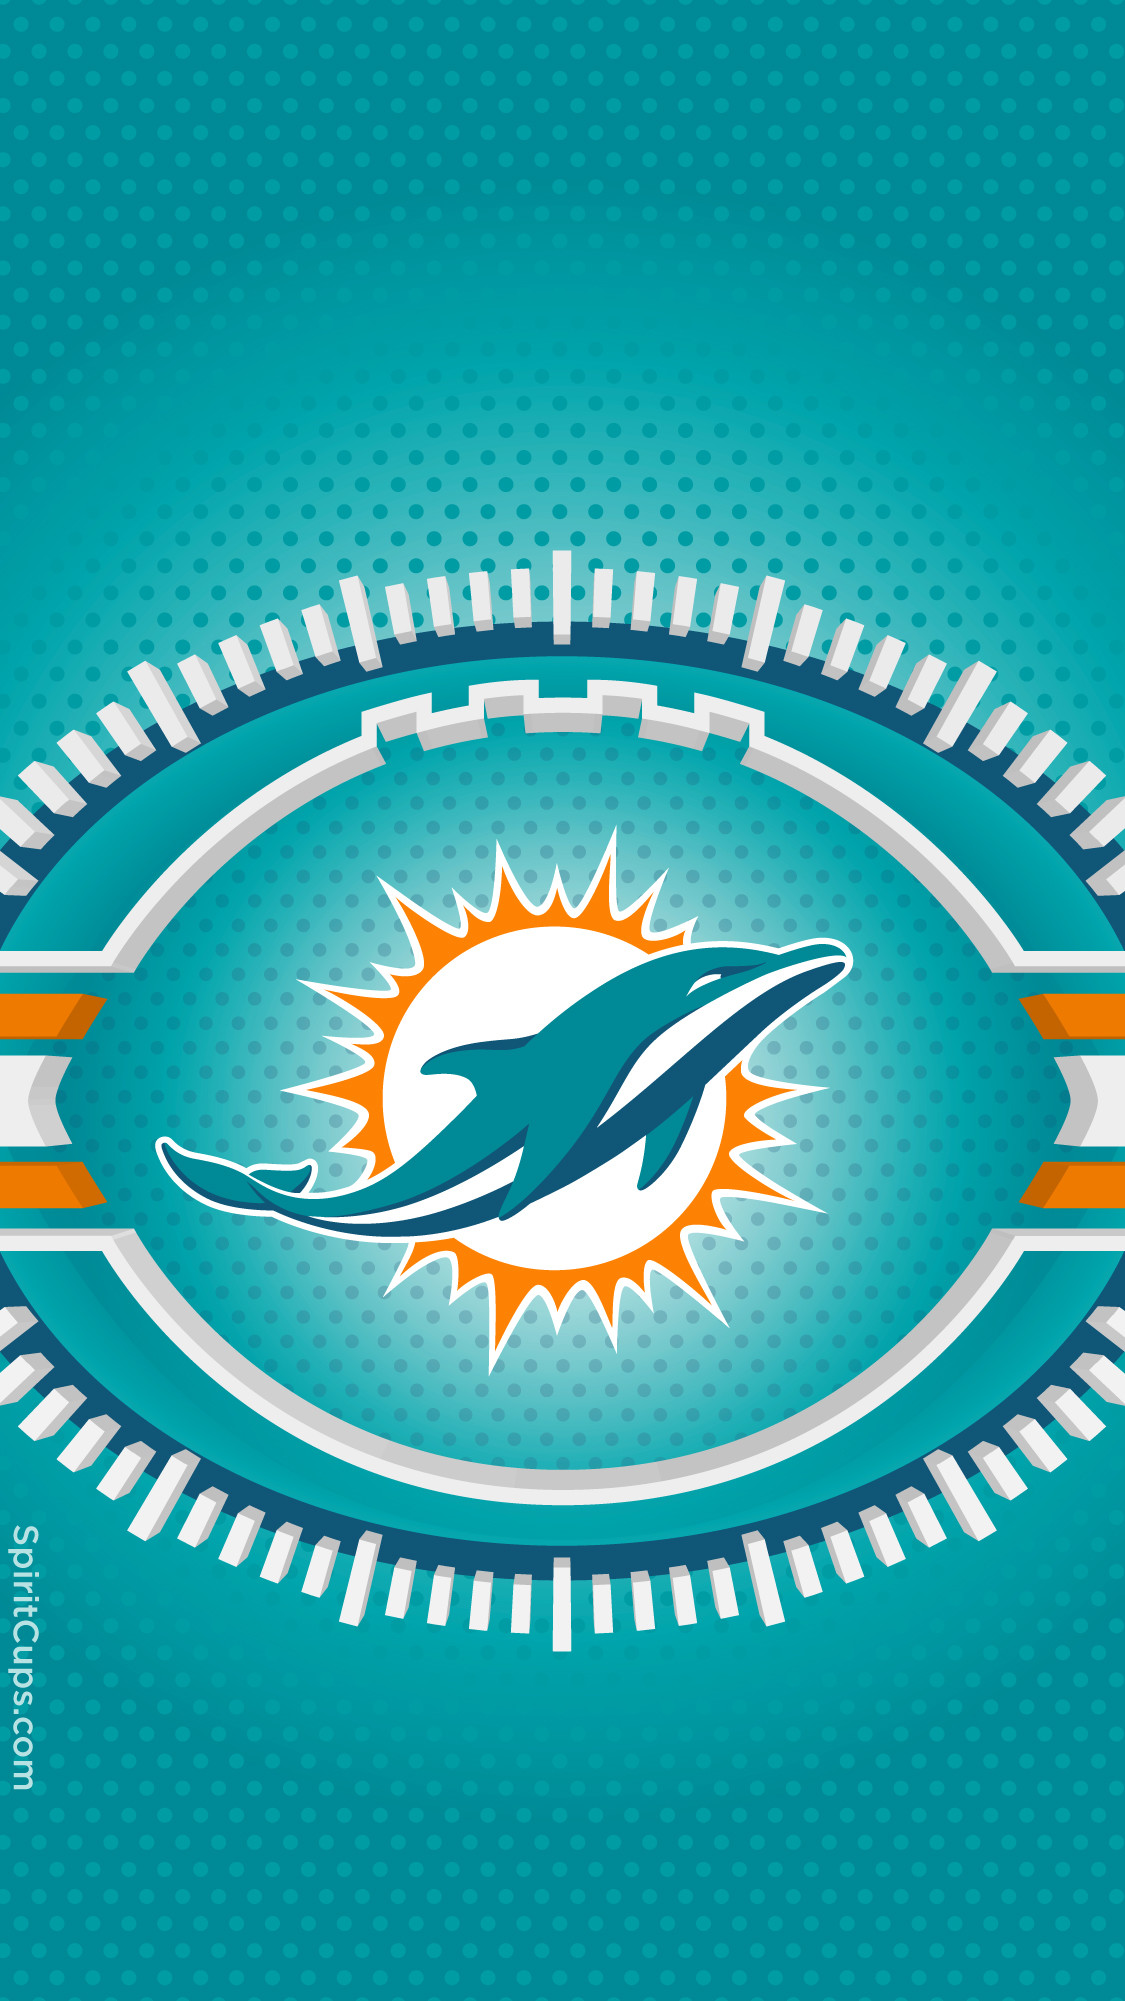 1125x2001 Miami Dolphins Logo Wallpaper. Iphone 6/6 Plus/6S/6S Plus/7/7 Plus/8/8 Plus  Sports Wallpaper with